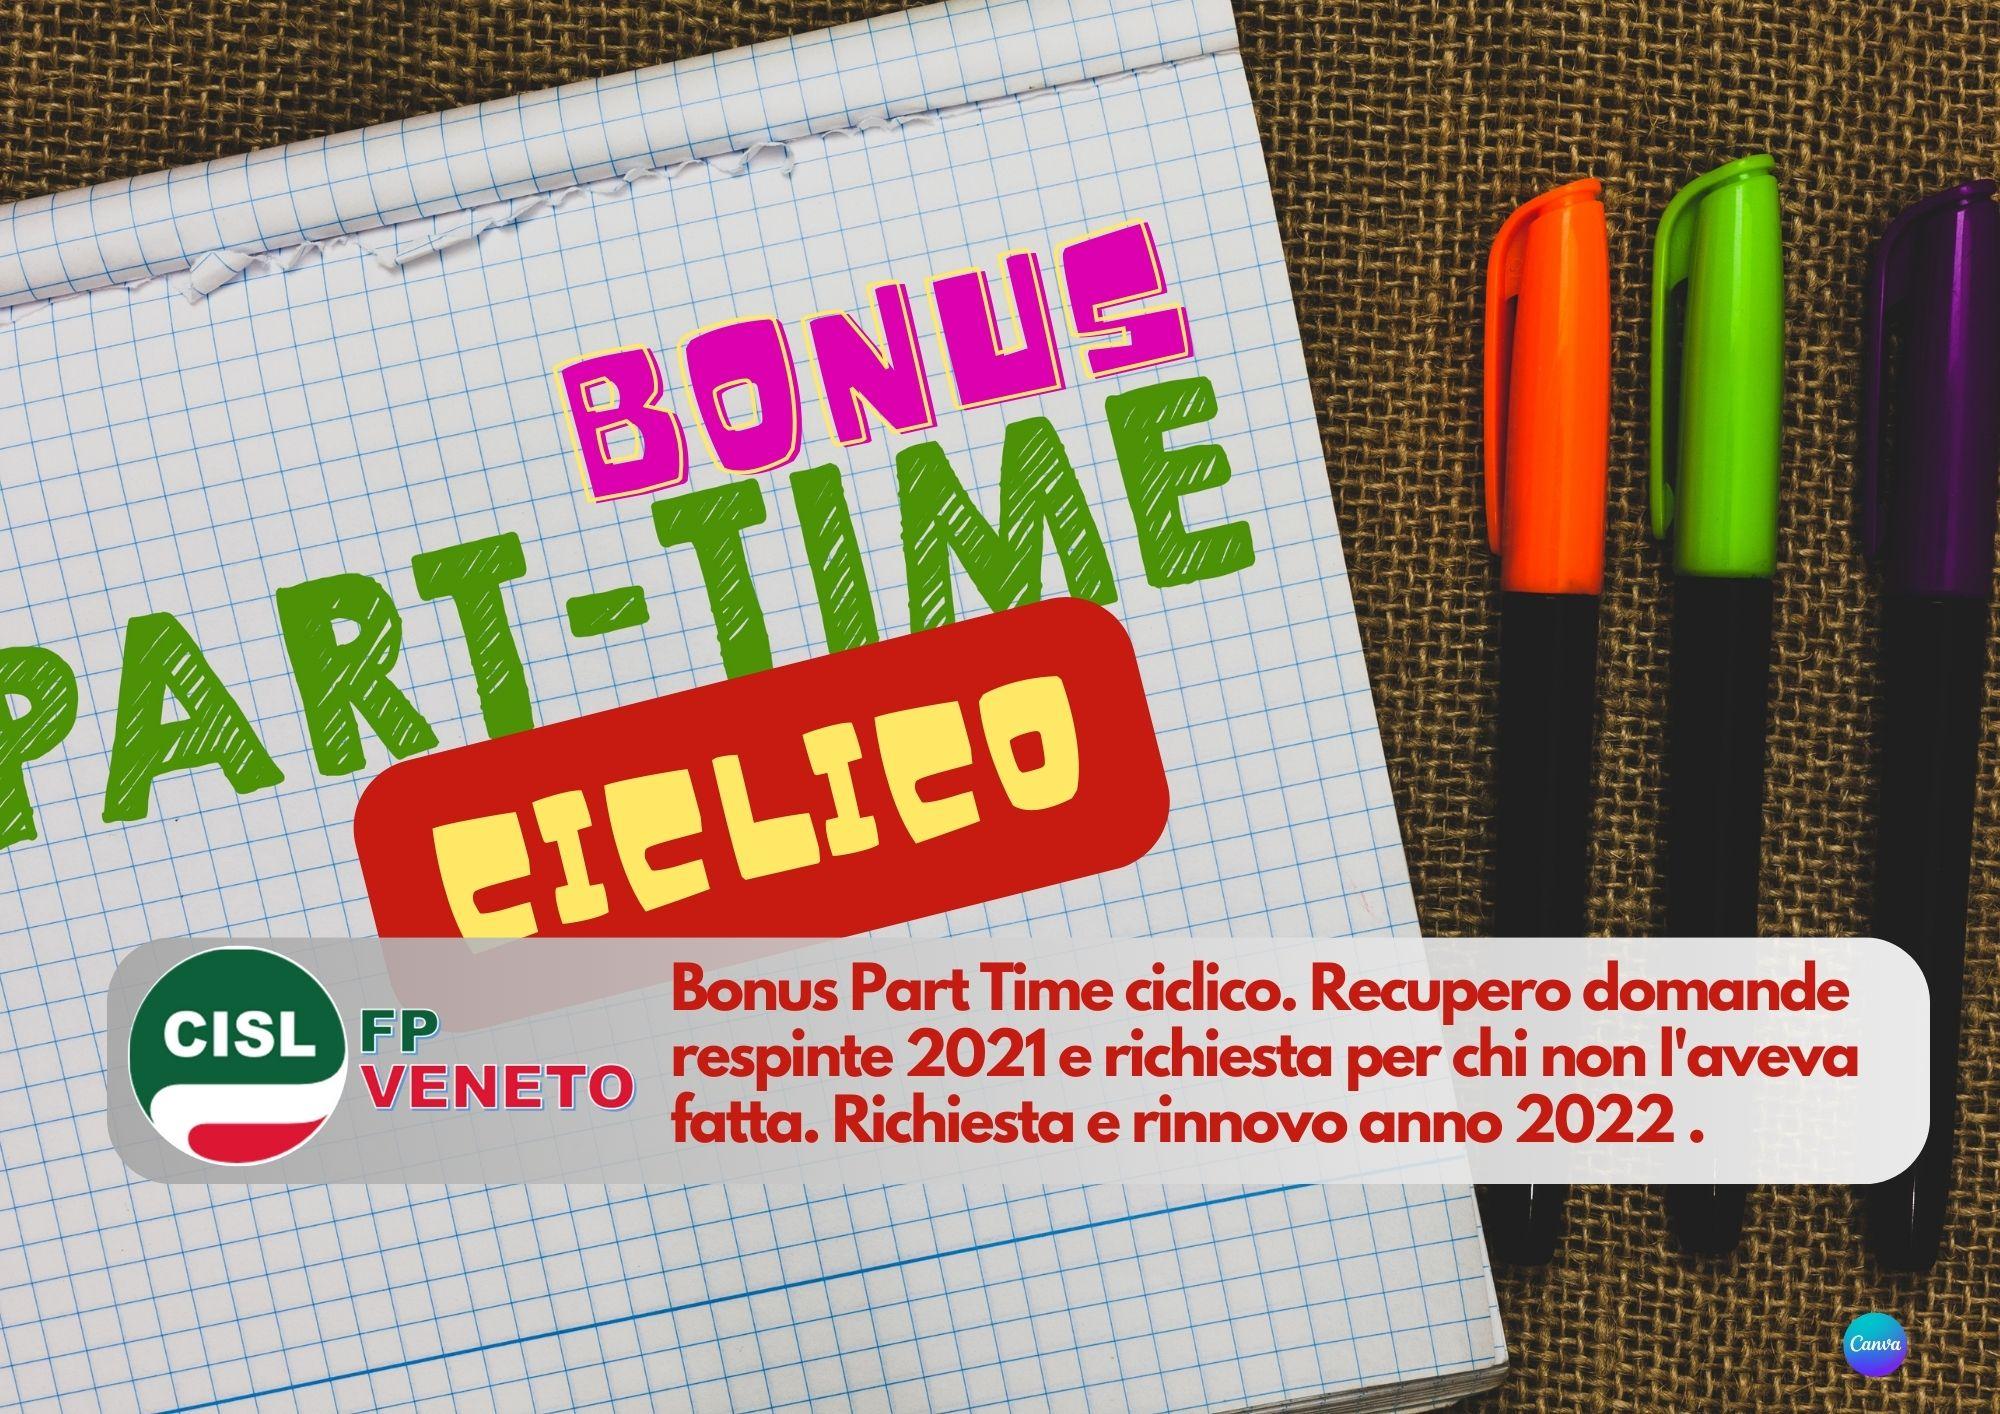 CISL FP Veneto. Bonus Part Time ciclico. Recupero domande respinte 2021 e rinnovo anno 2022